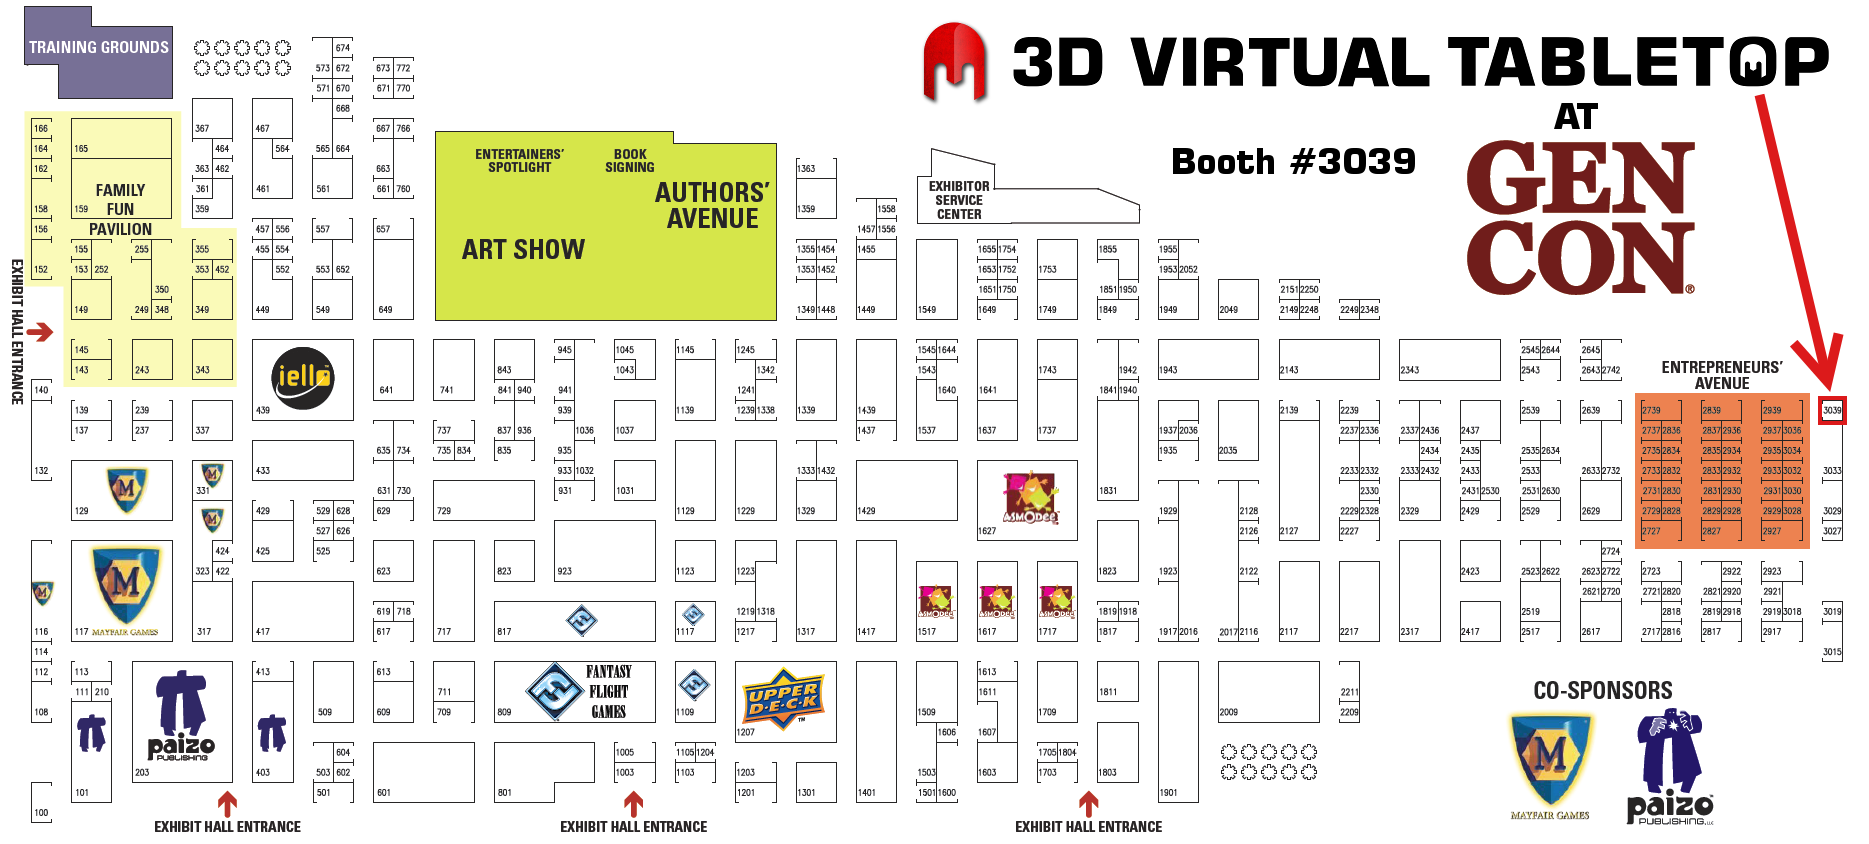 3D Virtual Tabletop Booth Location #3039 at Gen Con